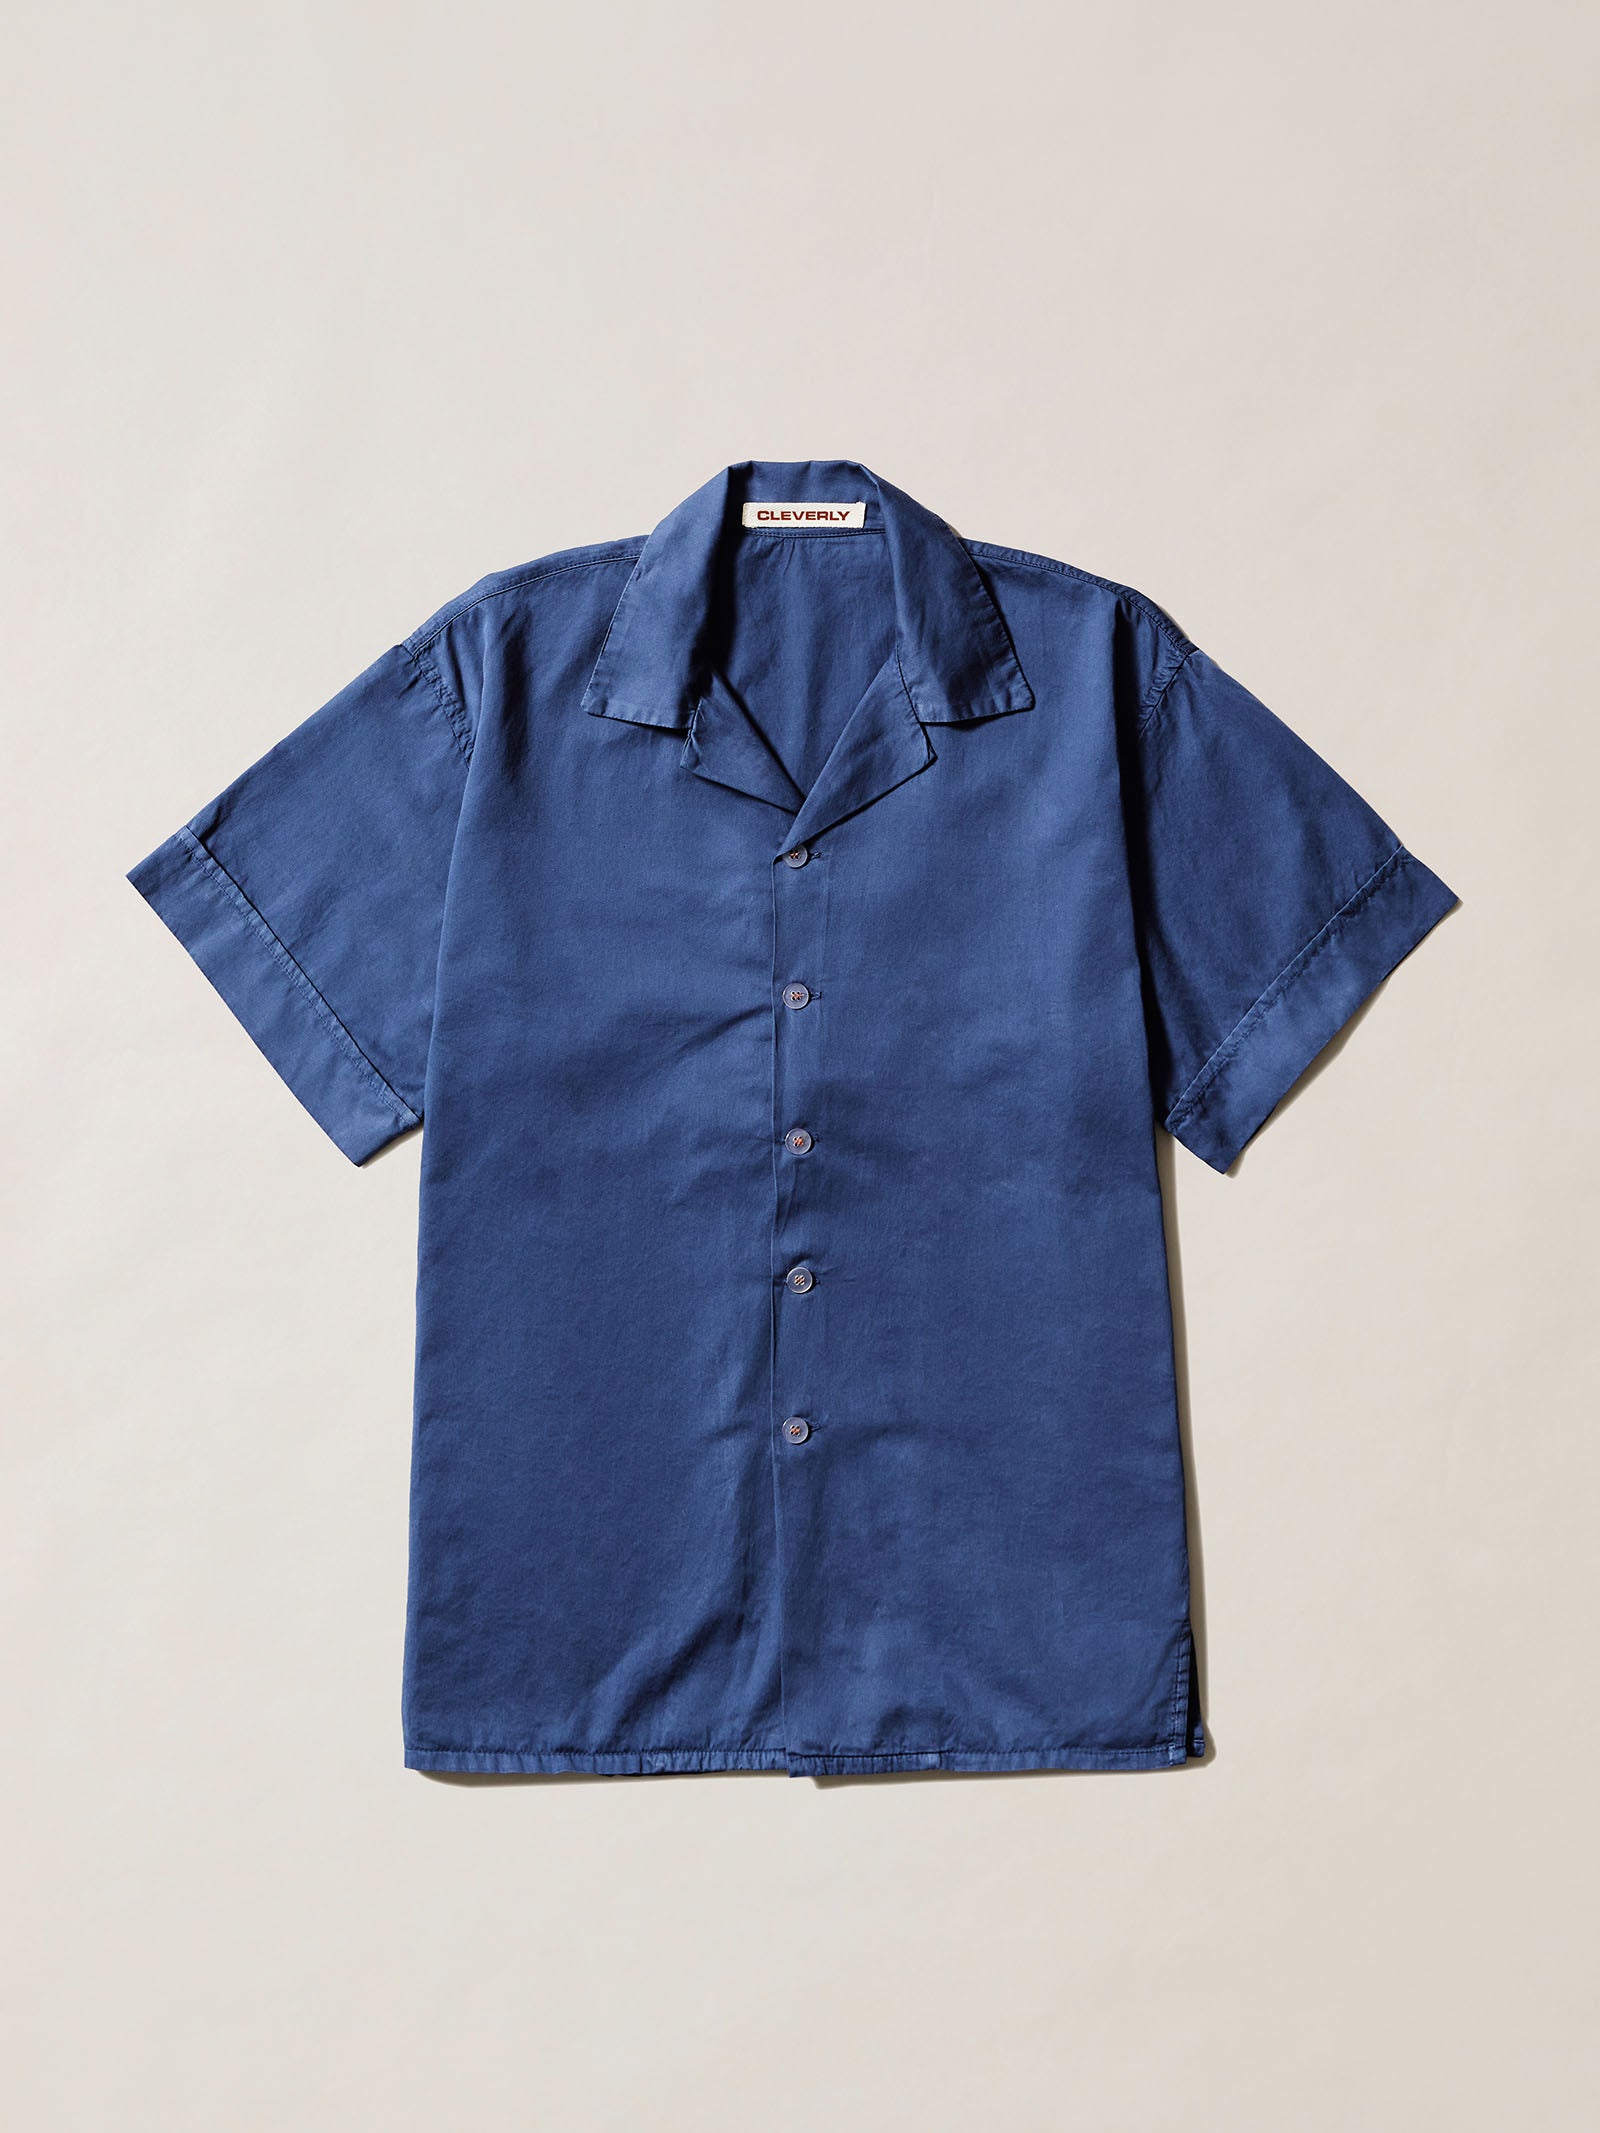 100% cotton pyjamas, soft short sleeve shirt, short sleeve pyjama shirt, navy lounge shirt